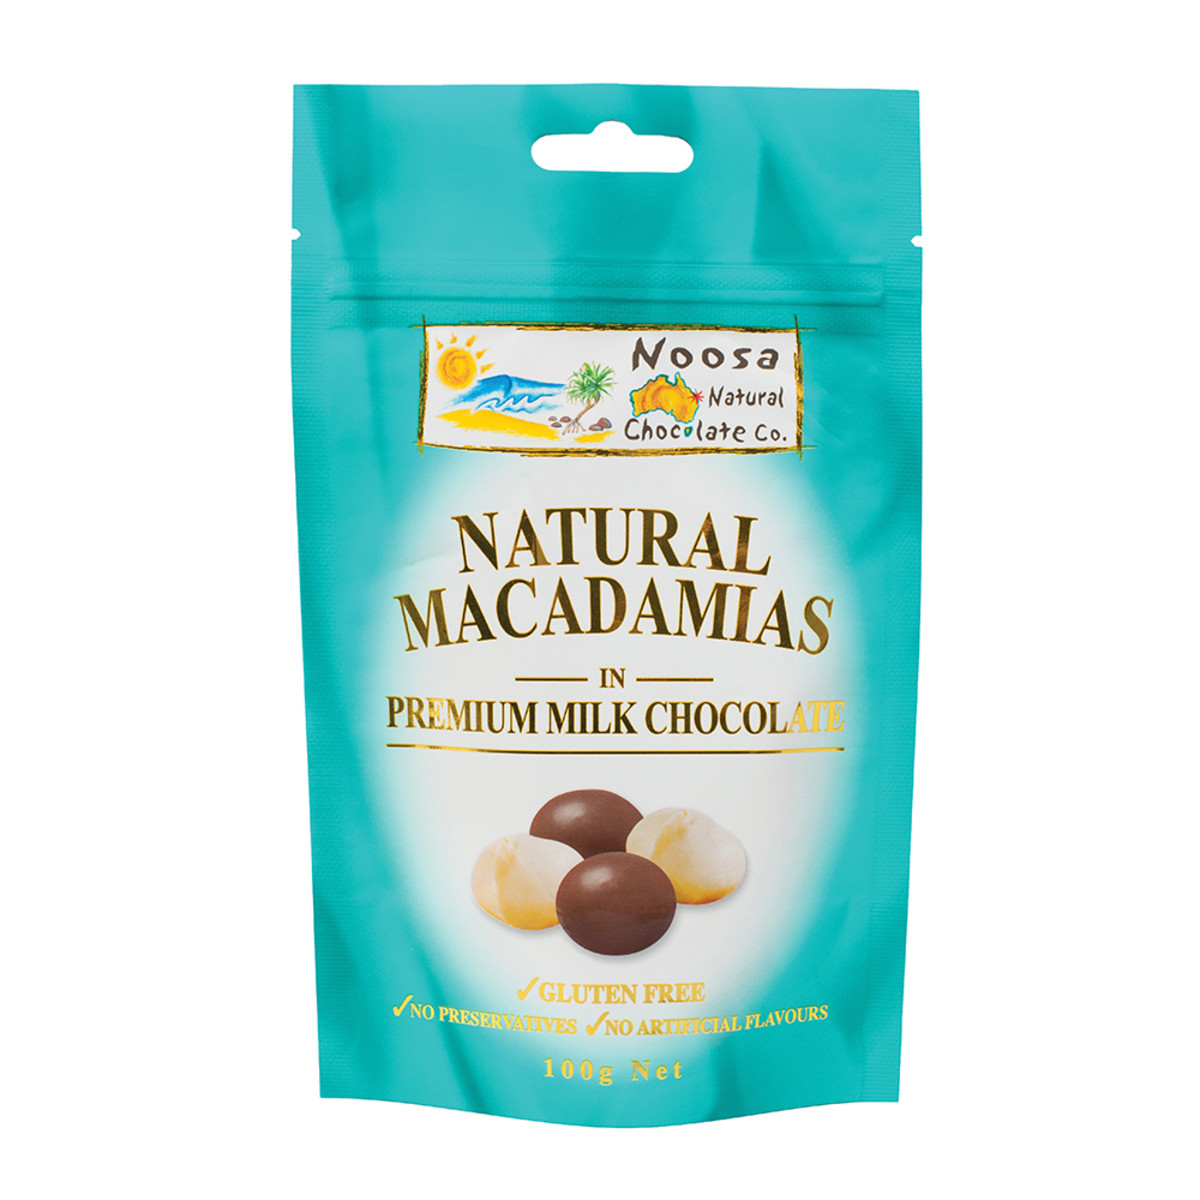 NOOSA NATURAL CHOC CO - Macadamias Milk Chocolate